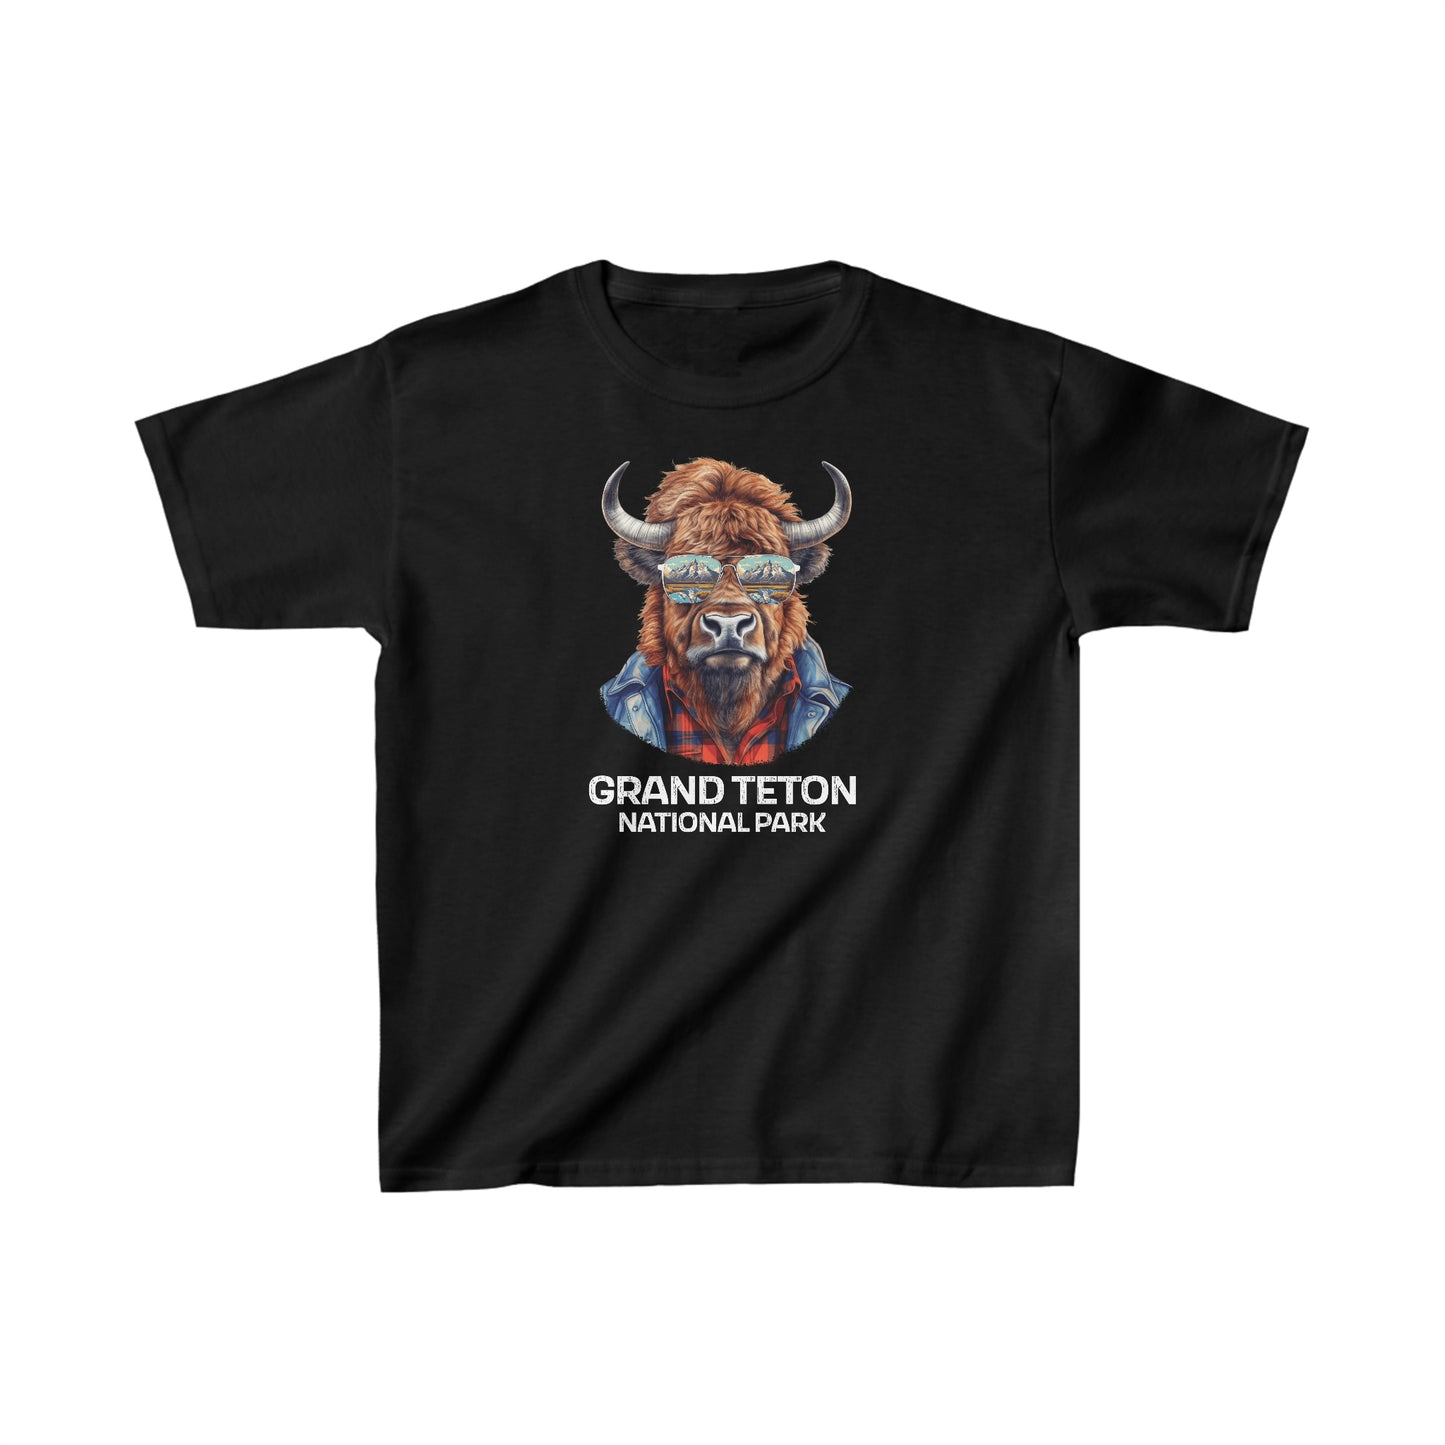 Grand Teton National Park Child T-Shirt - Cool Bison